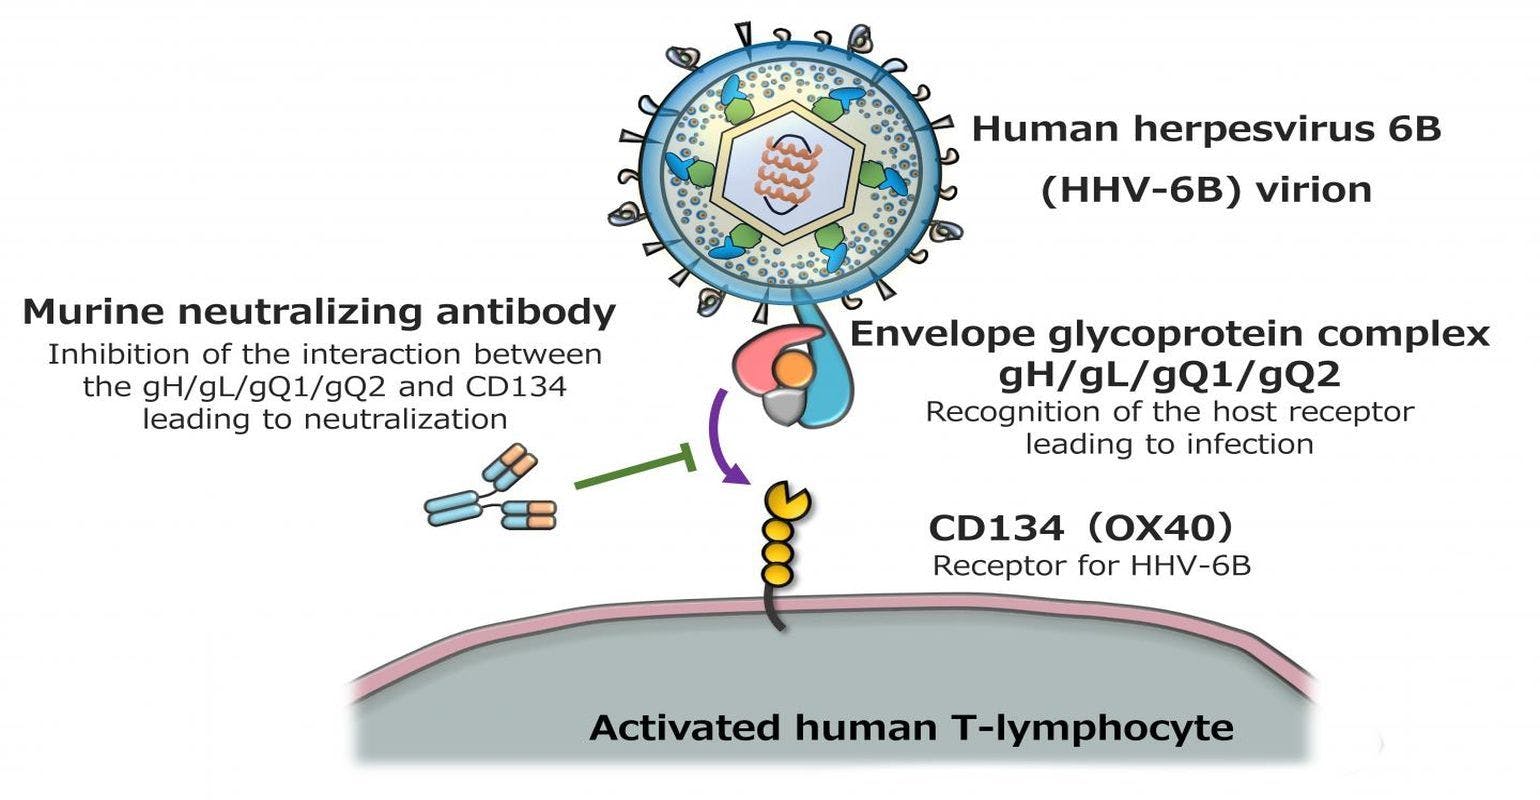 Humanization of Mouse Antibodies Targeting Human Herpesvirus 6B